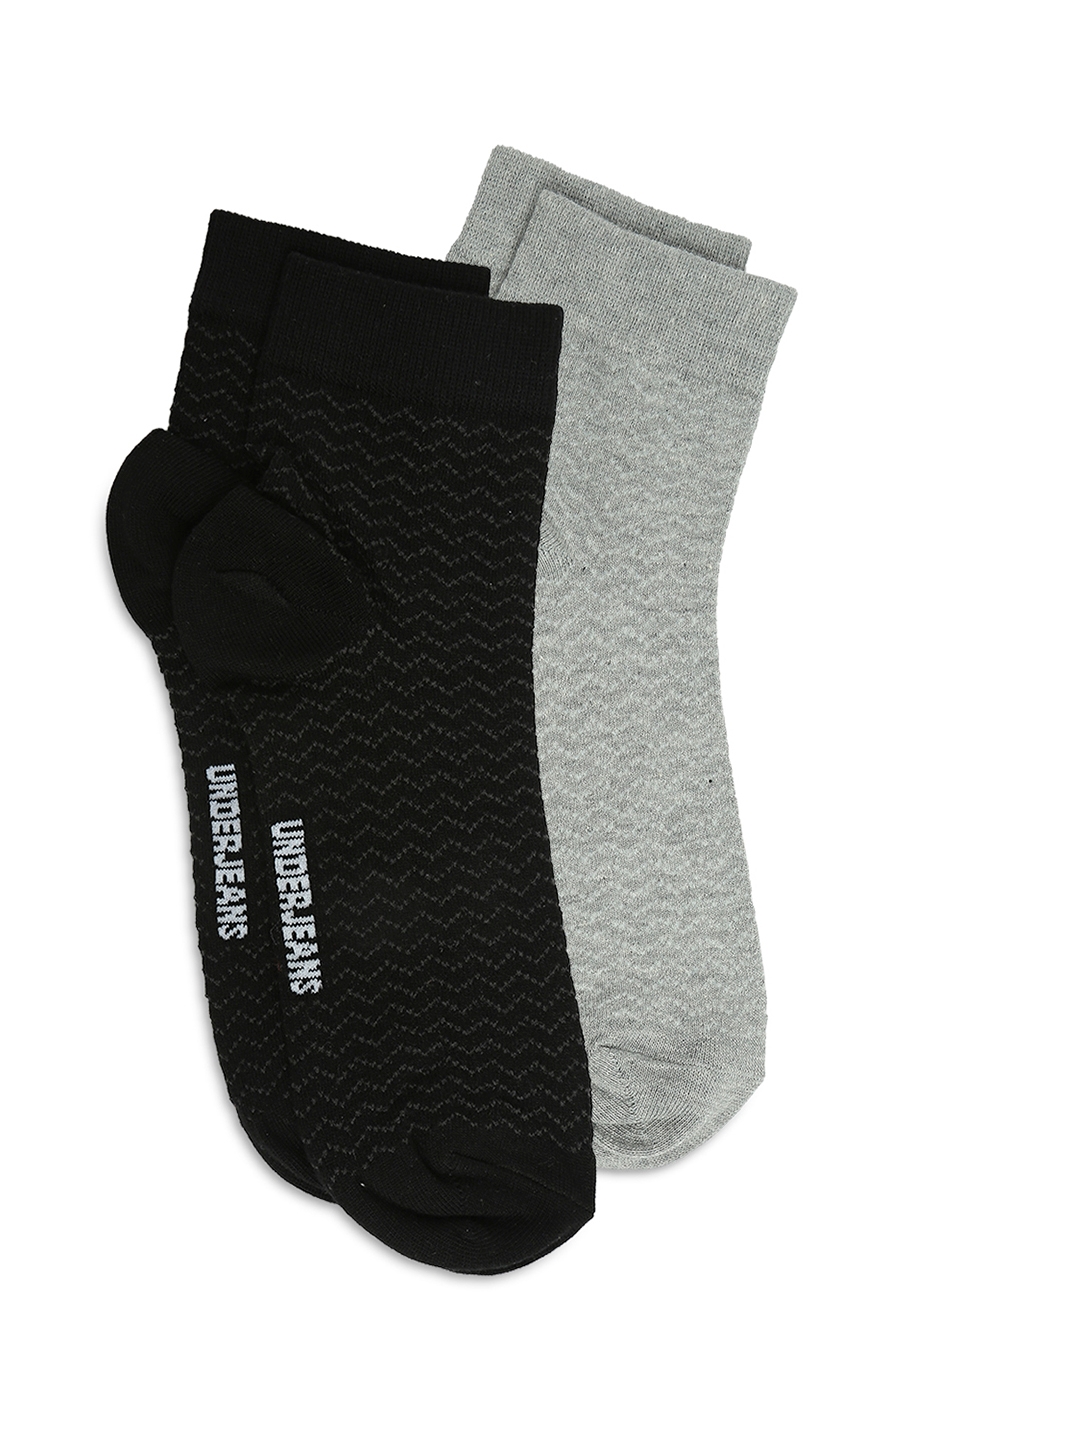 spykar | Underjeans by Spykar Premium Black & Grey Melange Ankle Length Socks - Pack Of 2 1